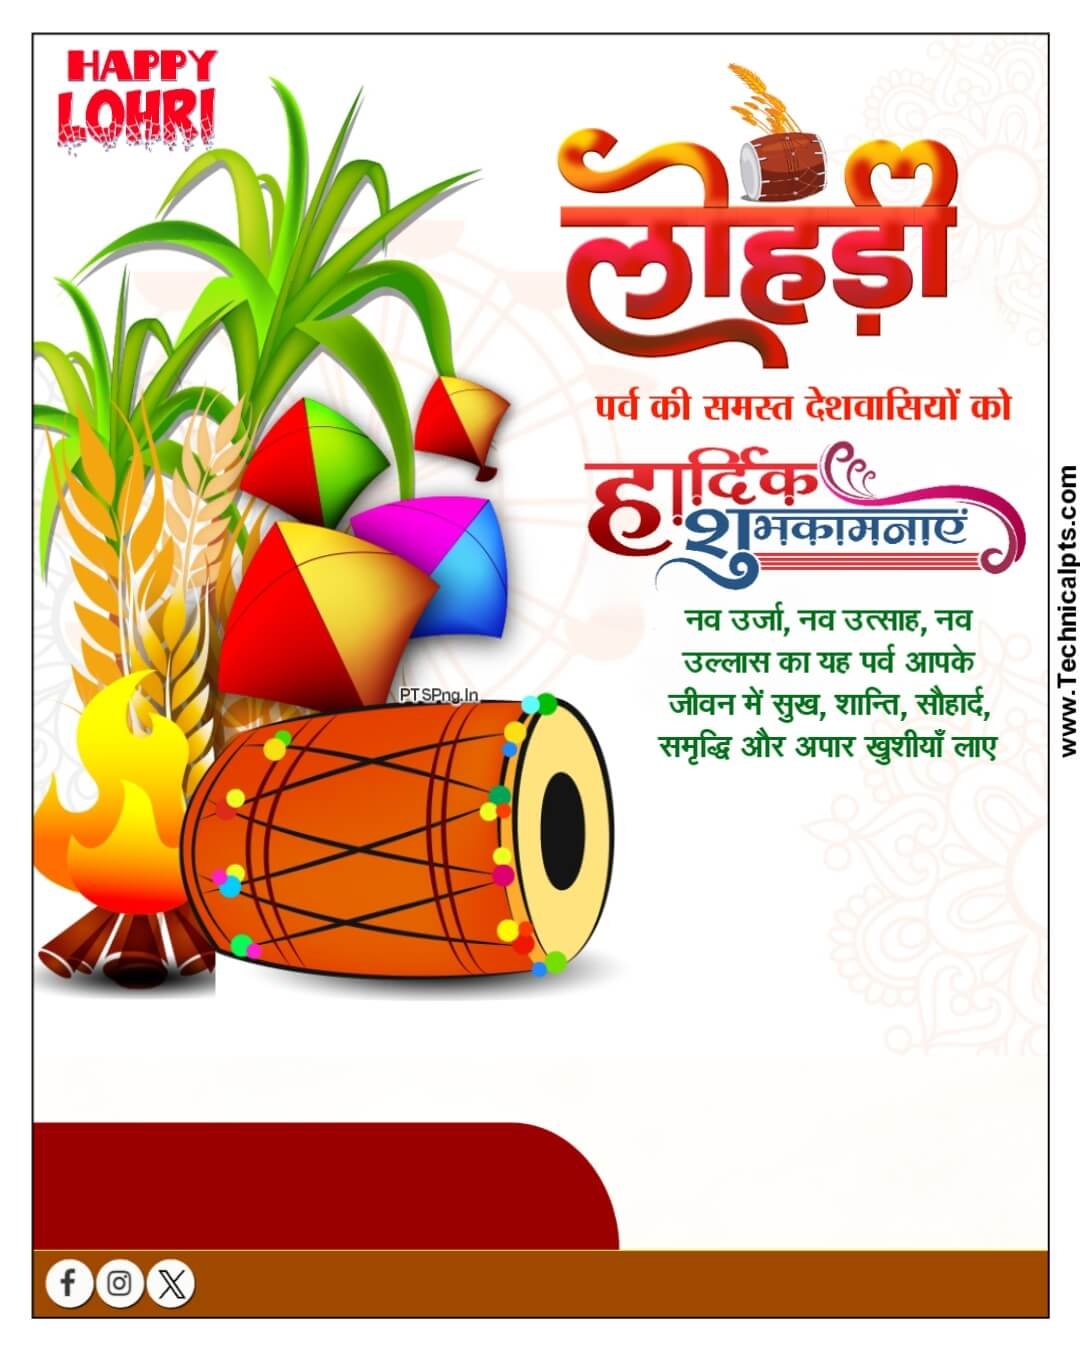 Lohari ka poster Kaise banaen mobile se| Lohri Parv ka banner Kaise banaen| happy Lohri festival editing images